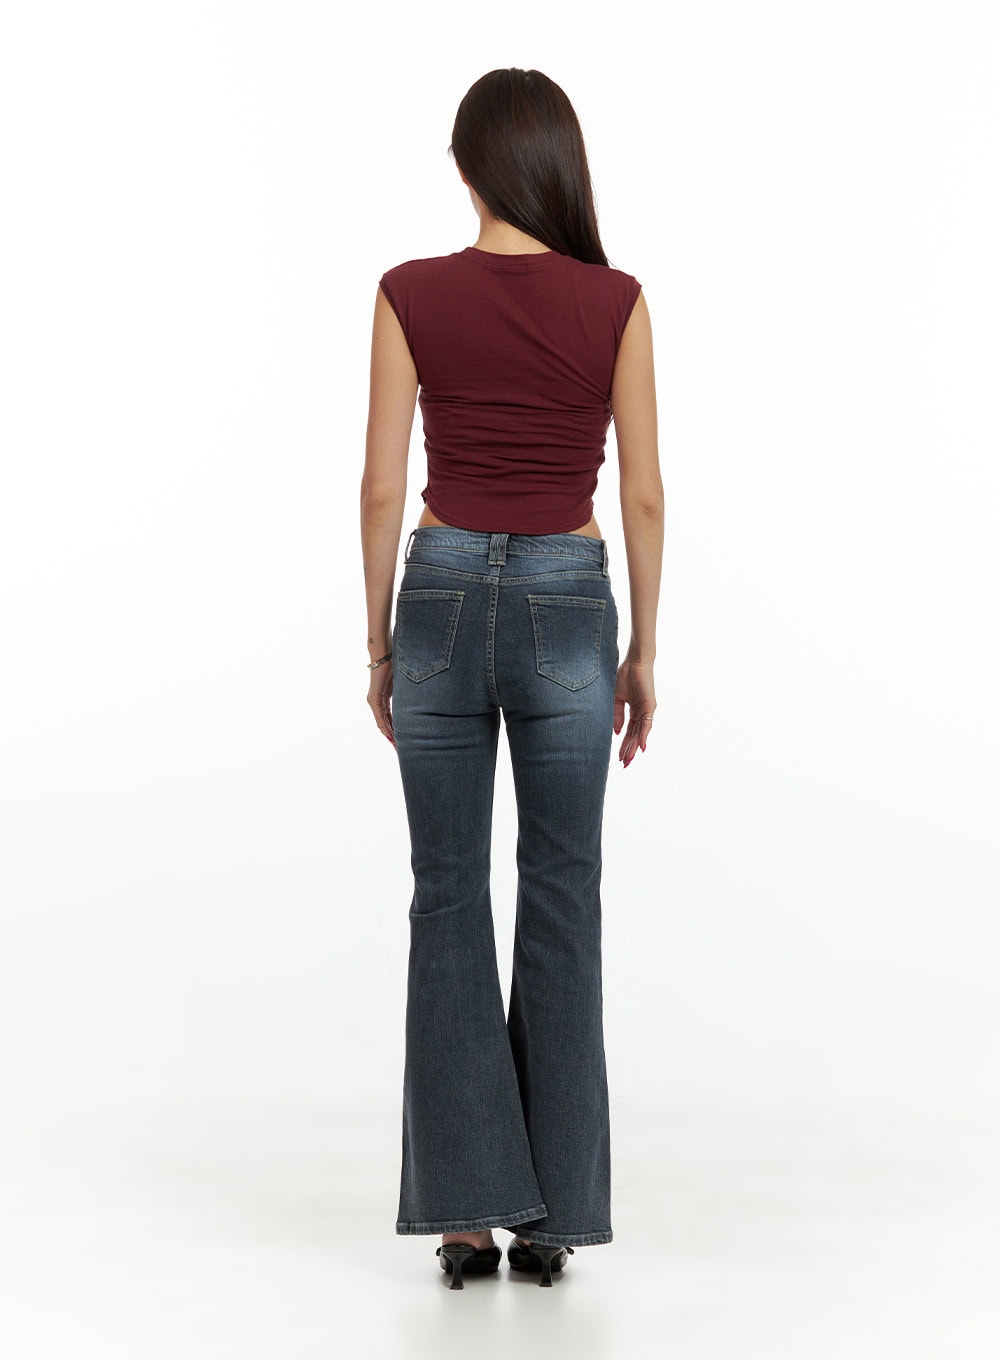 low-rise-bootcut-jeans-cu417